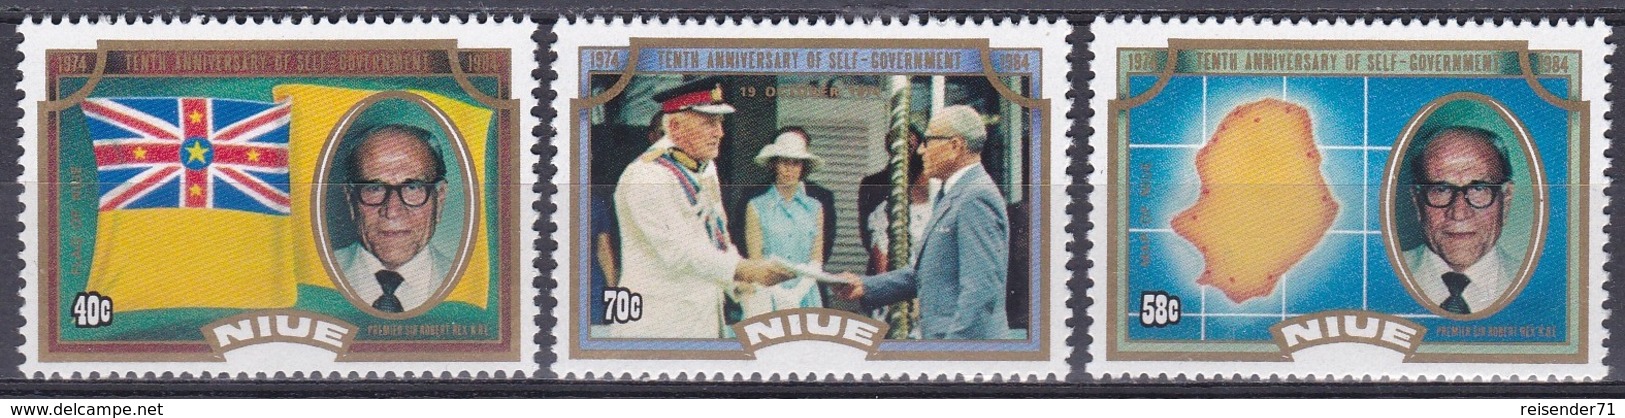 Niue 1984 Geschichte History Selbstverwaltung Autonomy Politiker Politicans Rex Blundell Flaggen Flags, Mi. 590-2 ** - Niue